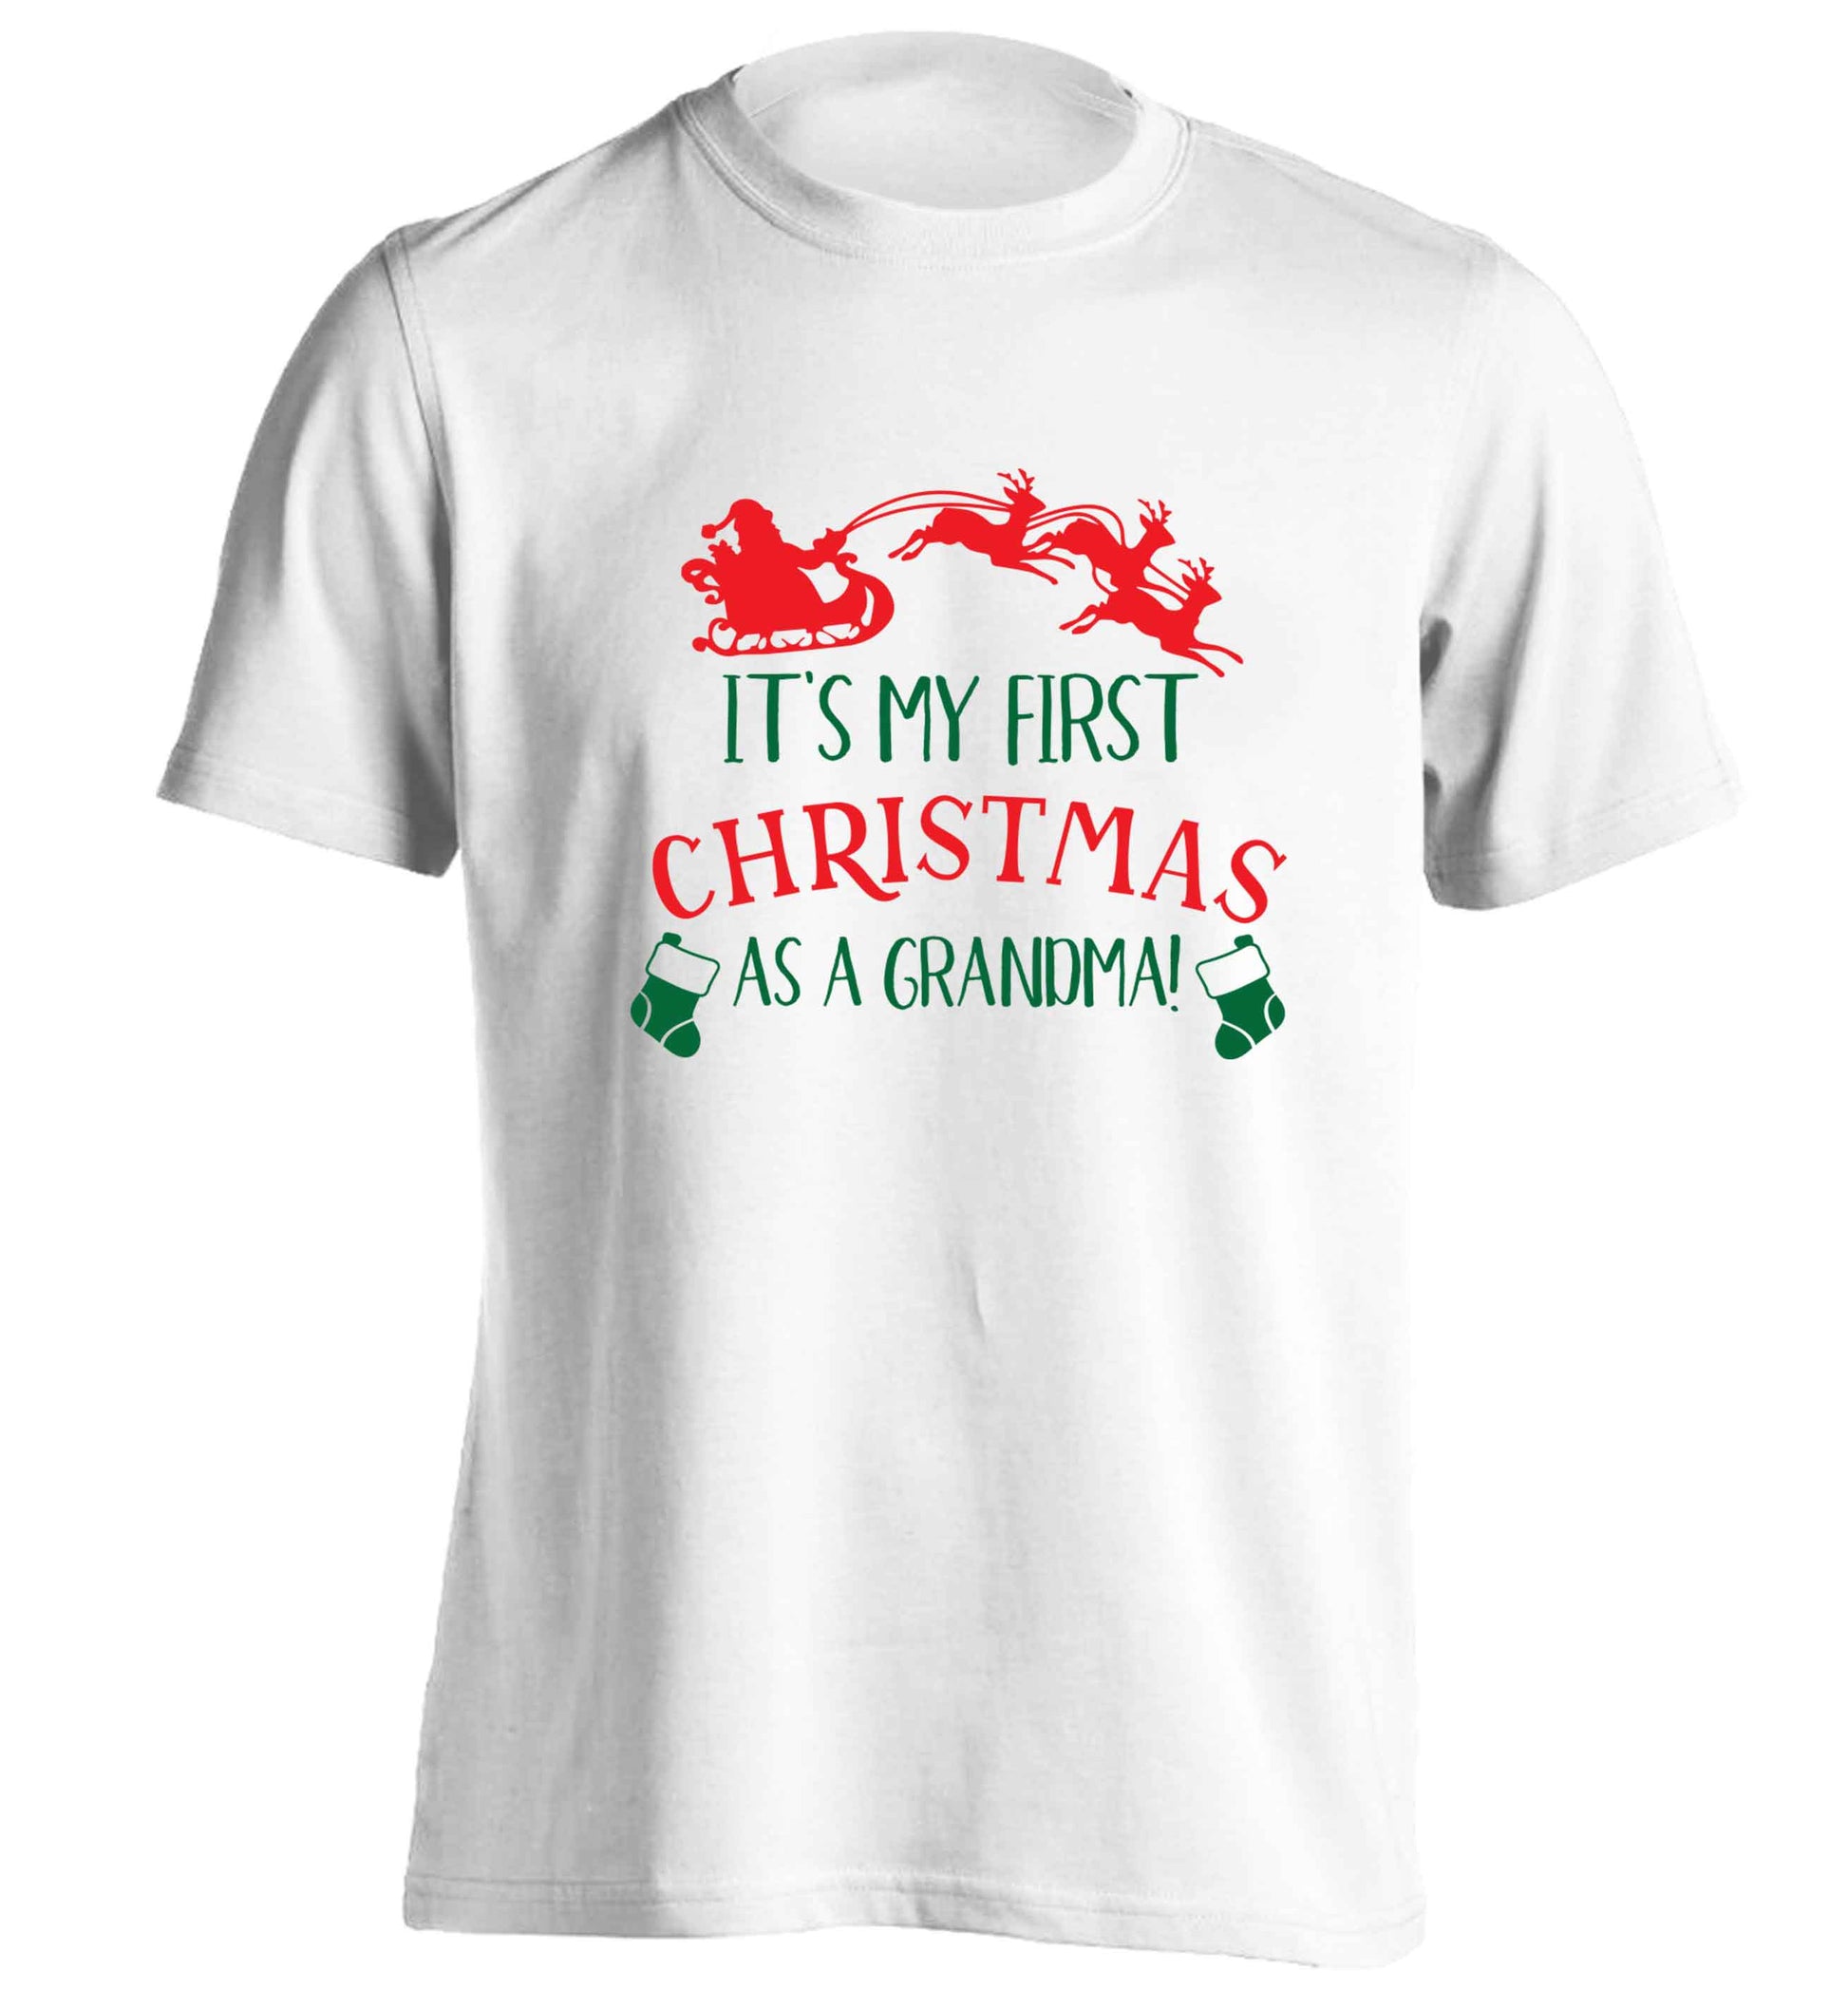 It's my first Christmas as a grandma! adults unisex white Tshirt 2XL